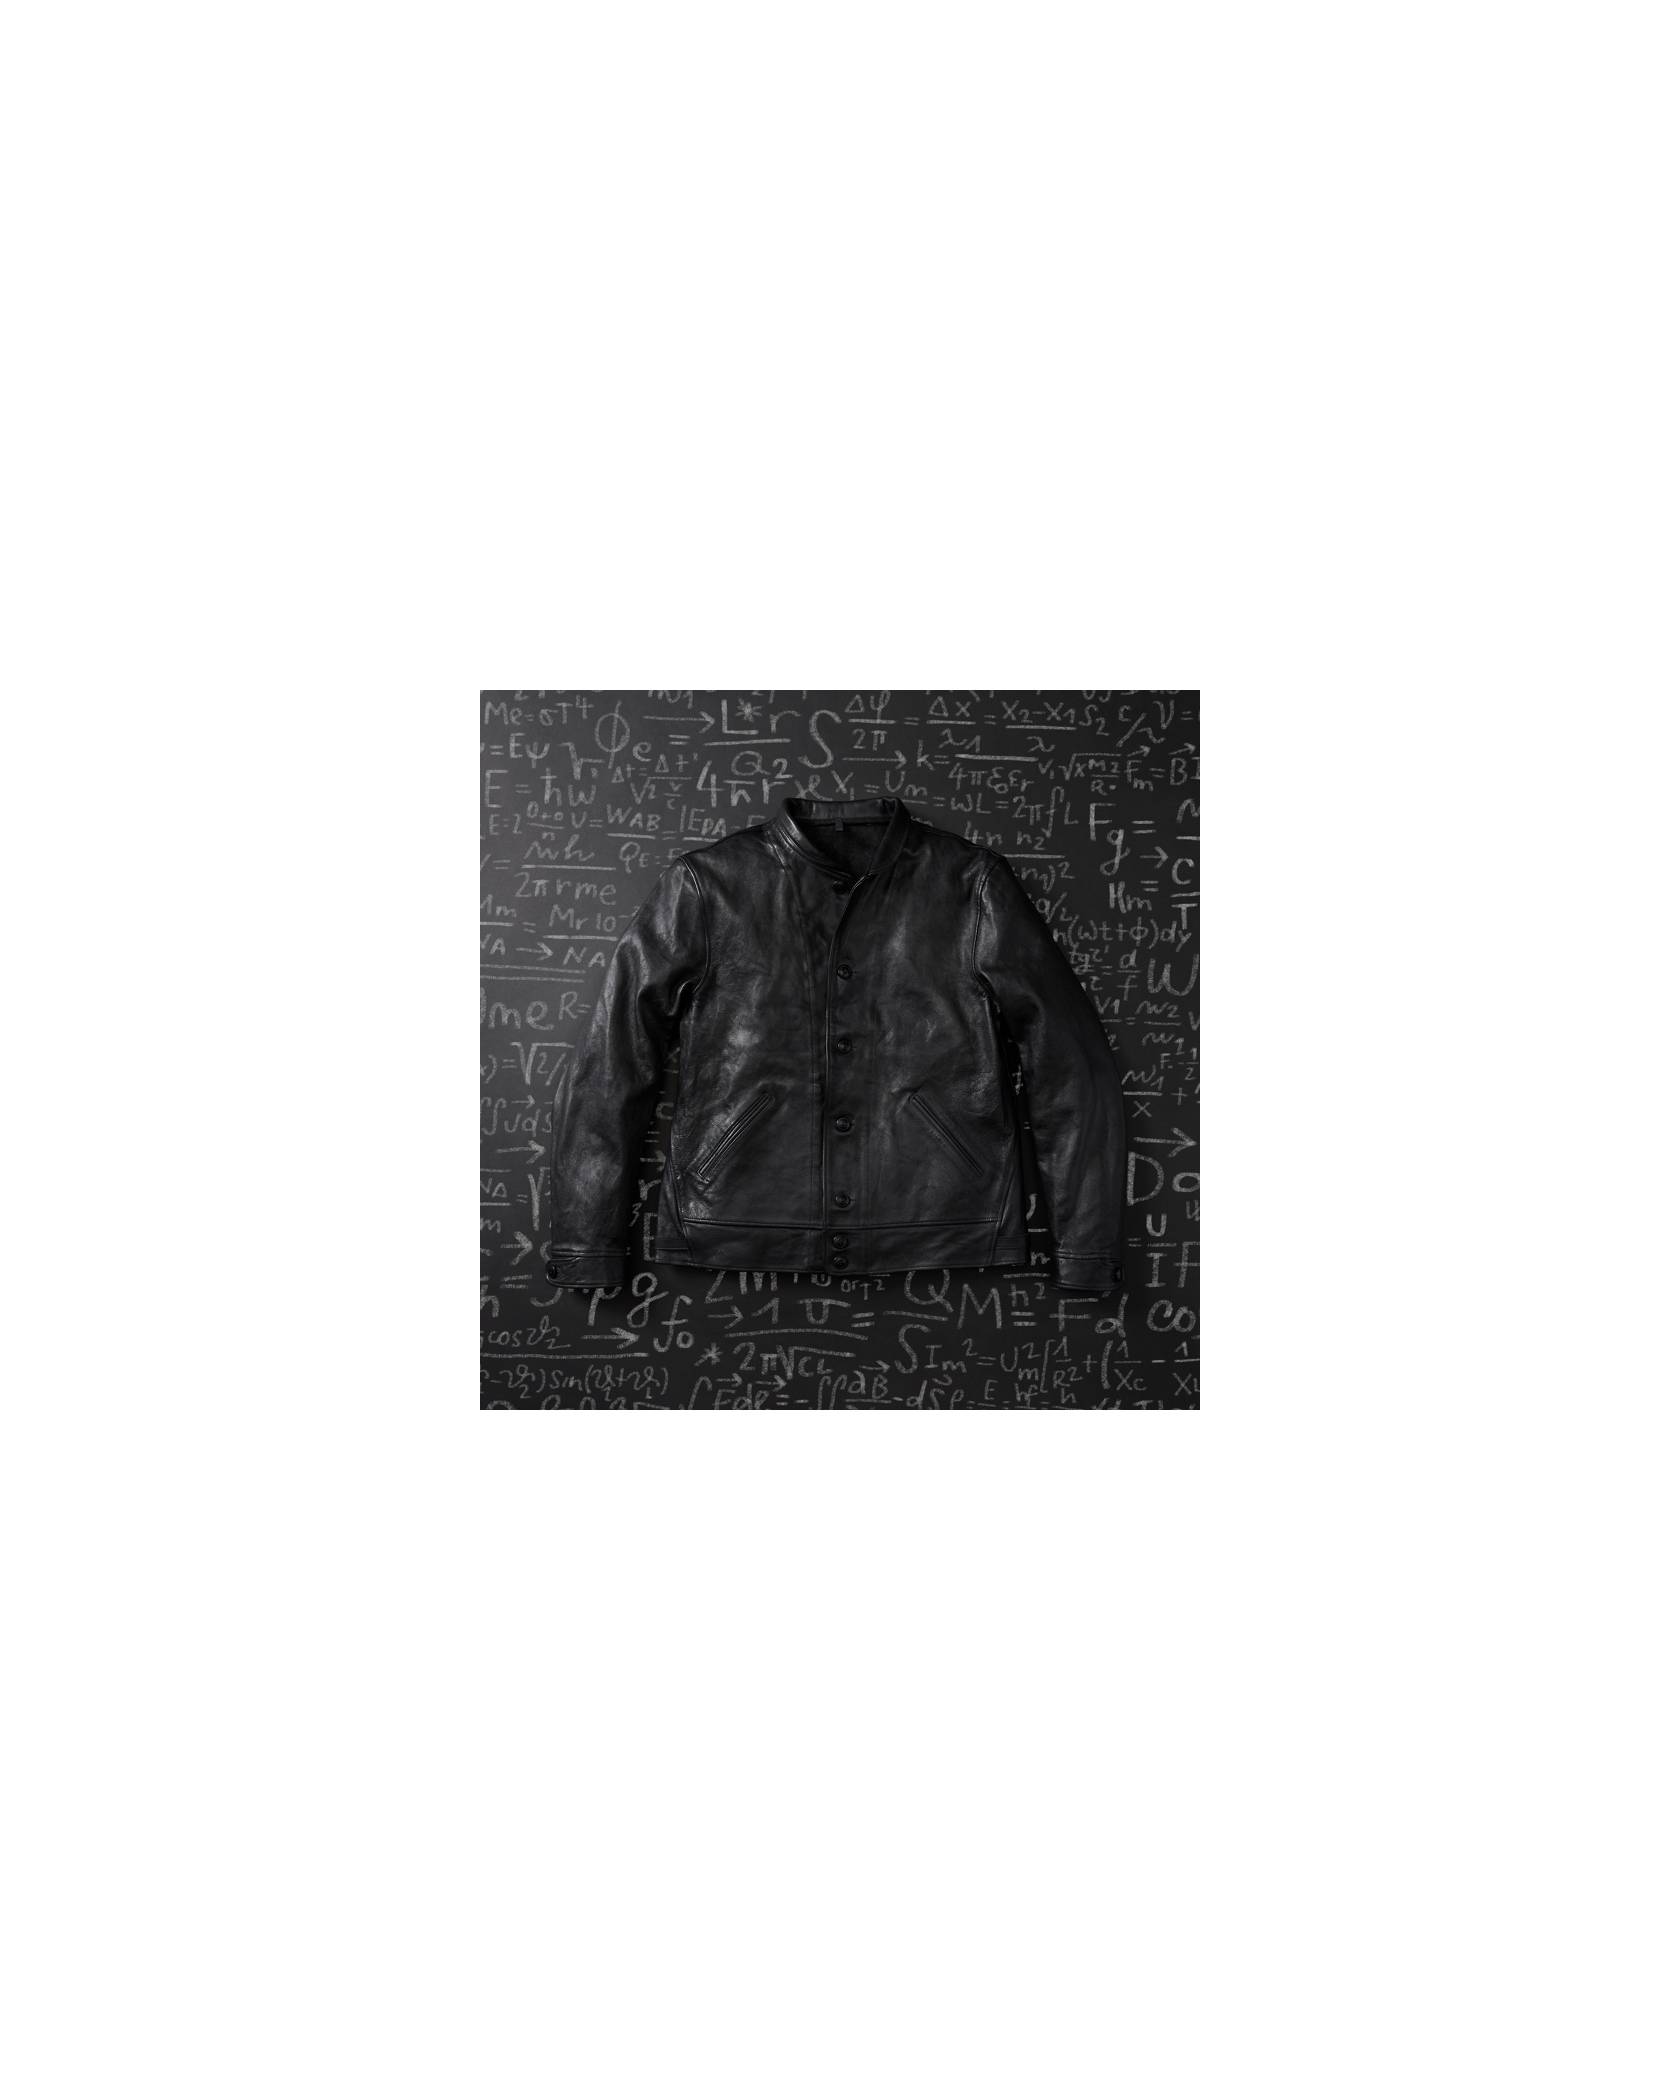 Albert Einstein Jacket  Menlo Cossack Leather Jacket - Jackets